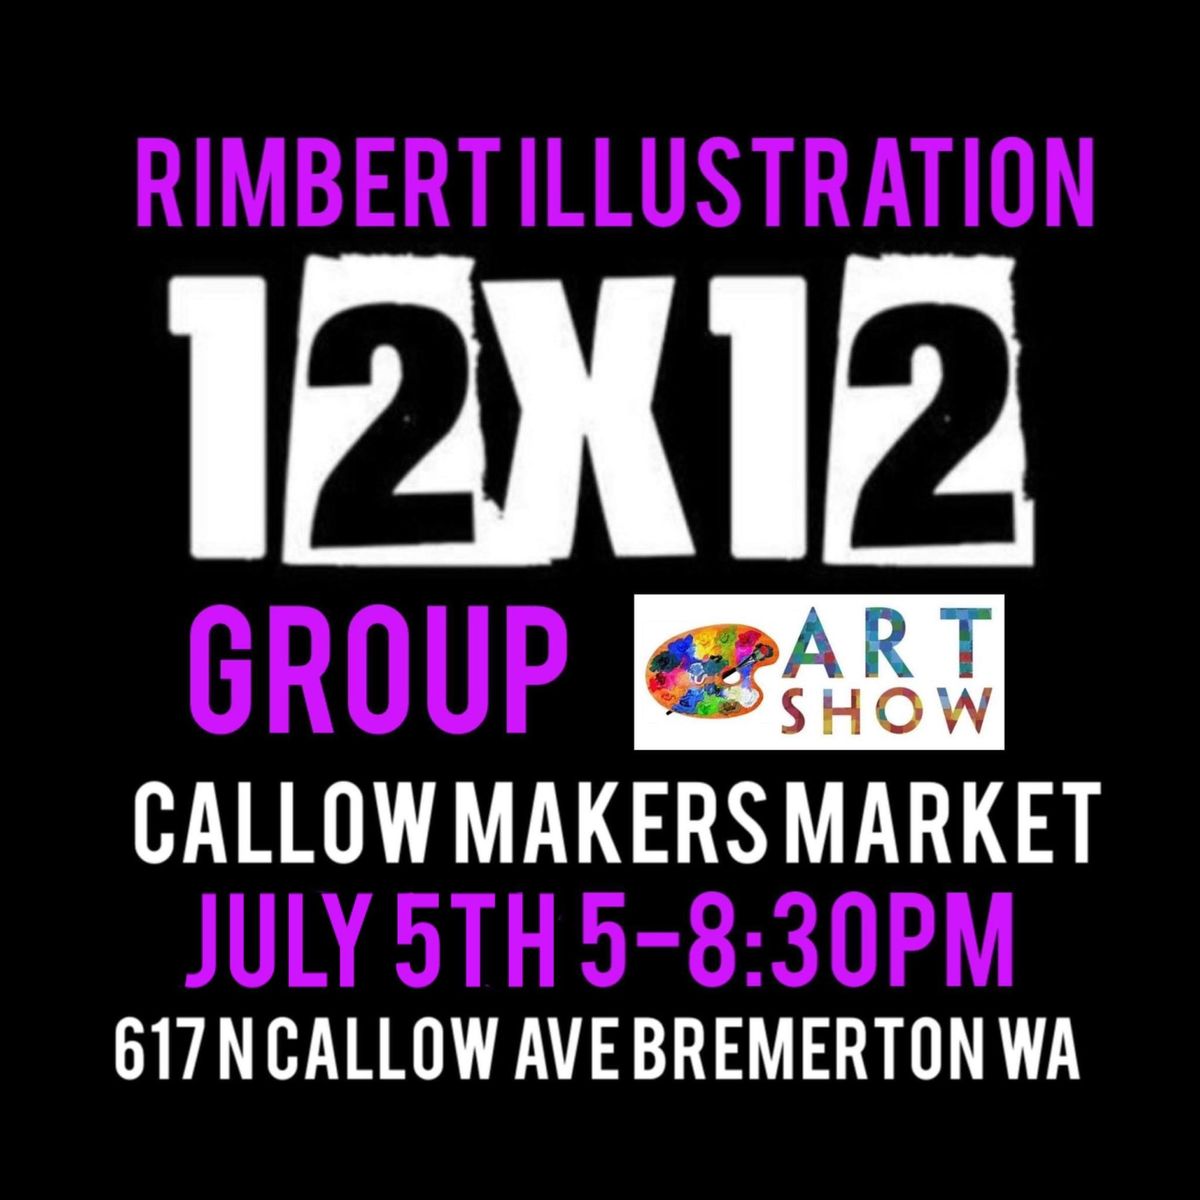 12x12 Group Art Show & Callow Makers Market